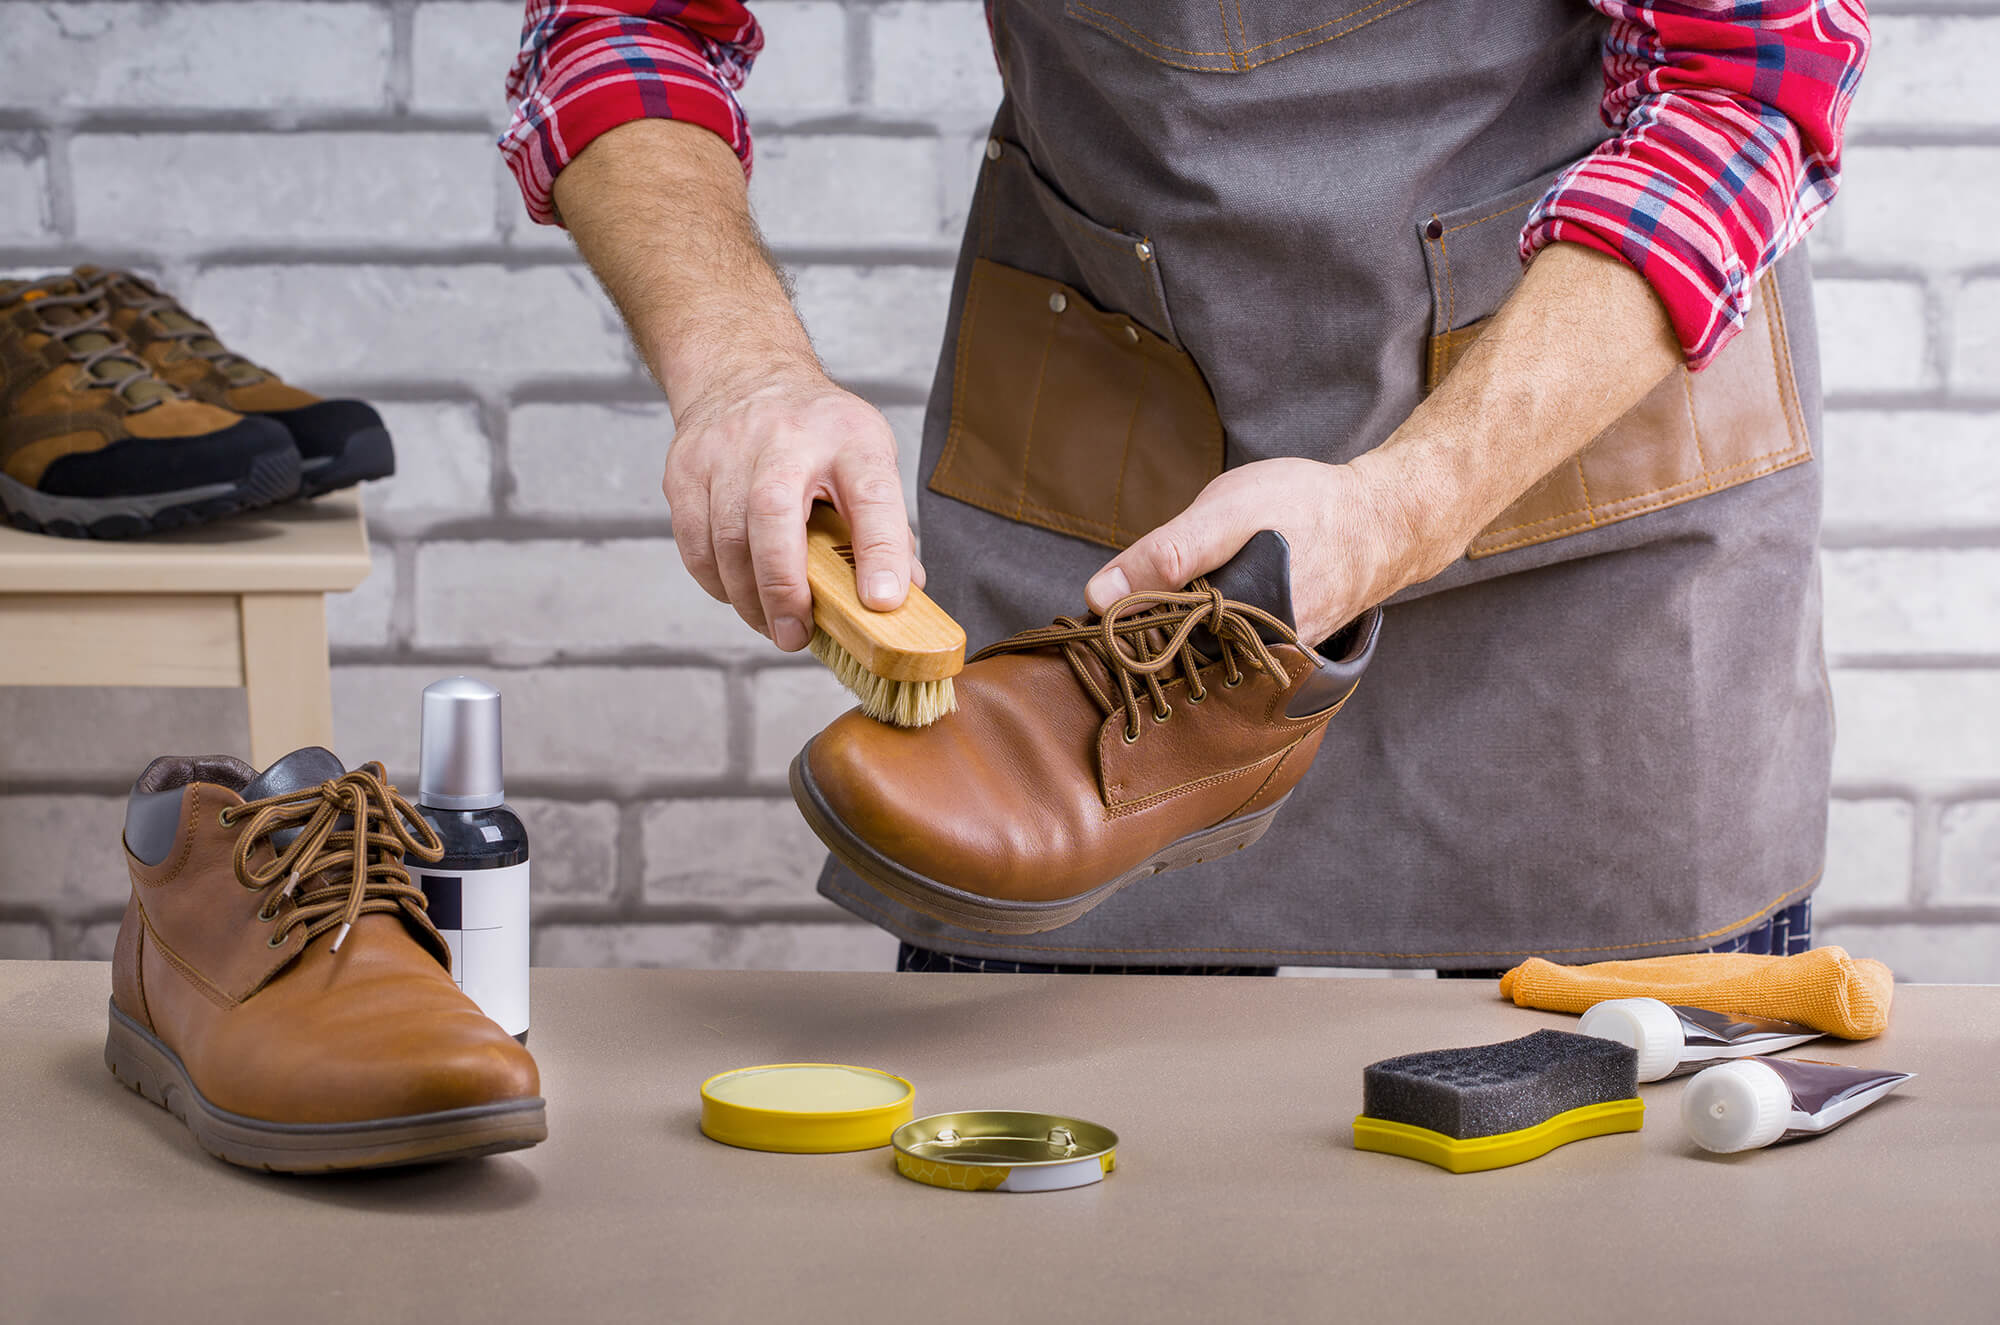 Proveedores para reparadores de calzado